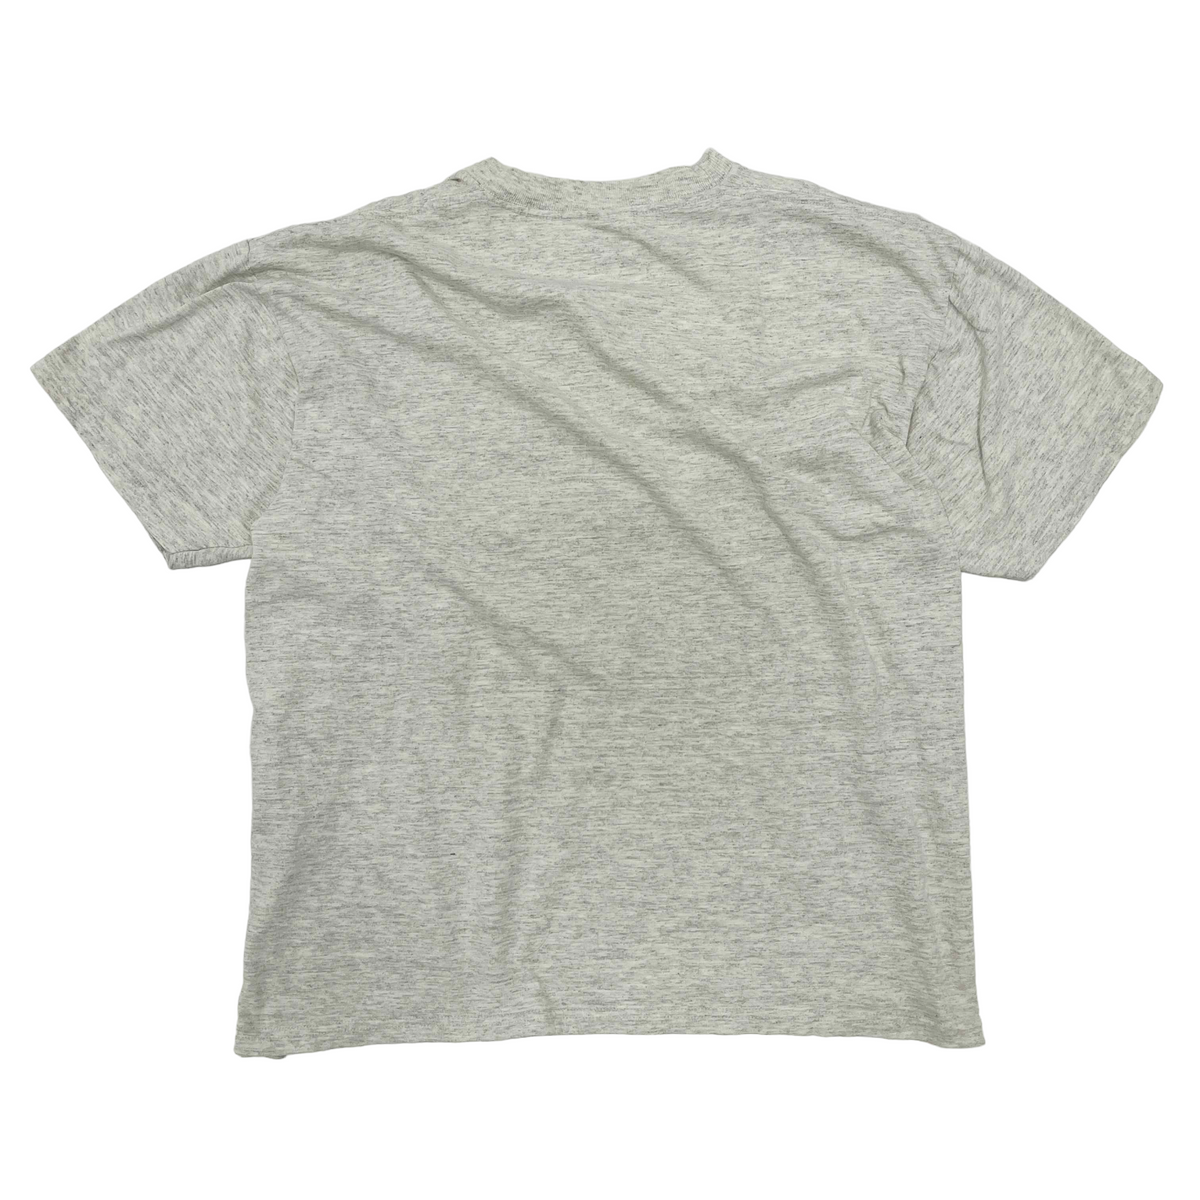 Rockies Men's T-Shirt - Cream - XL